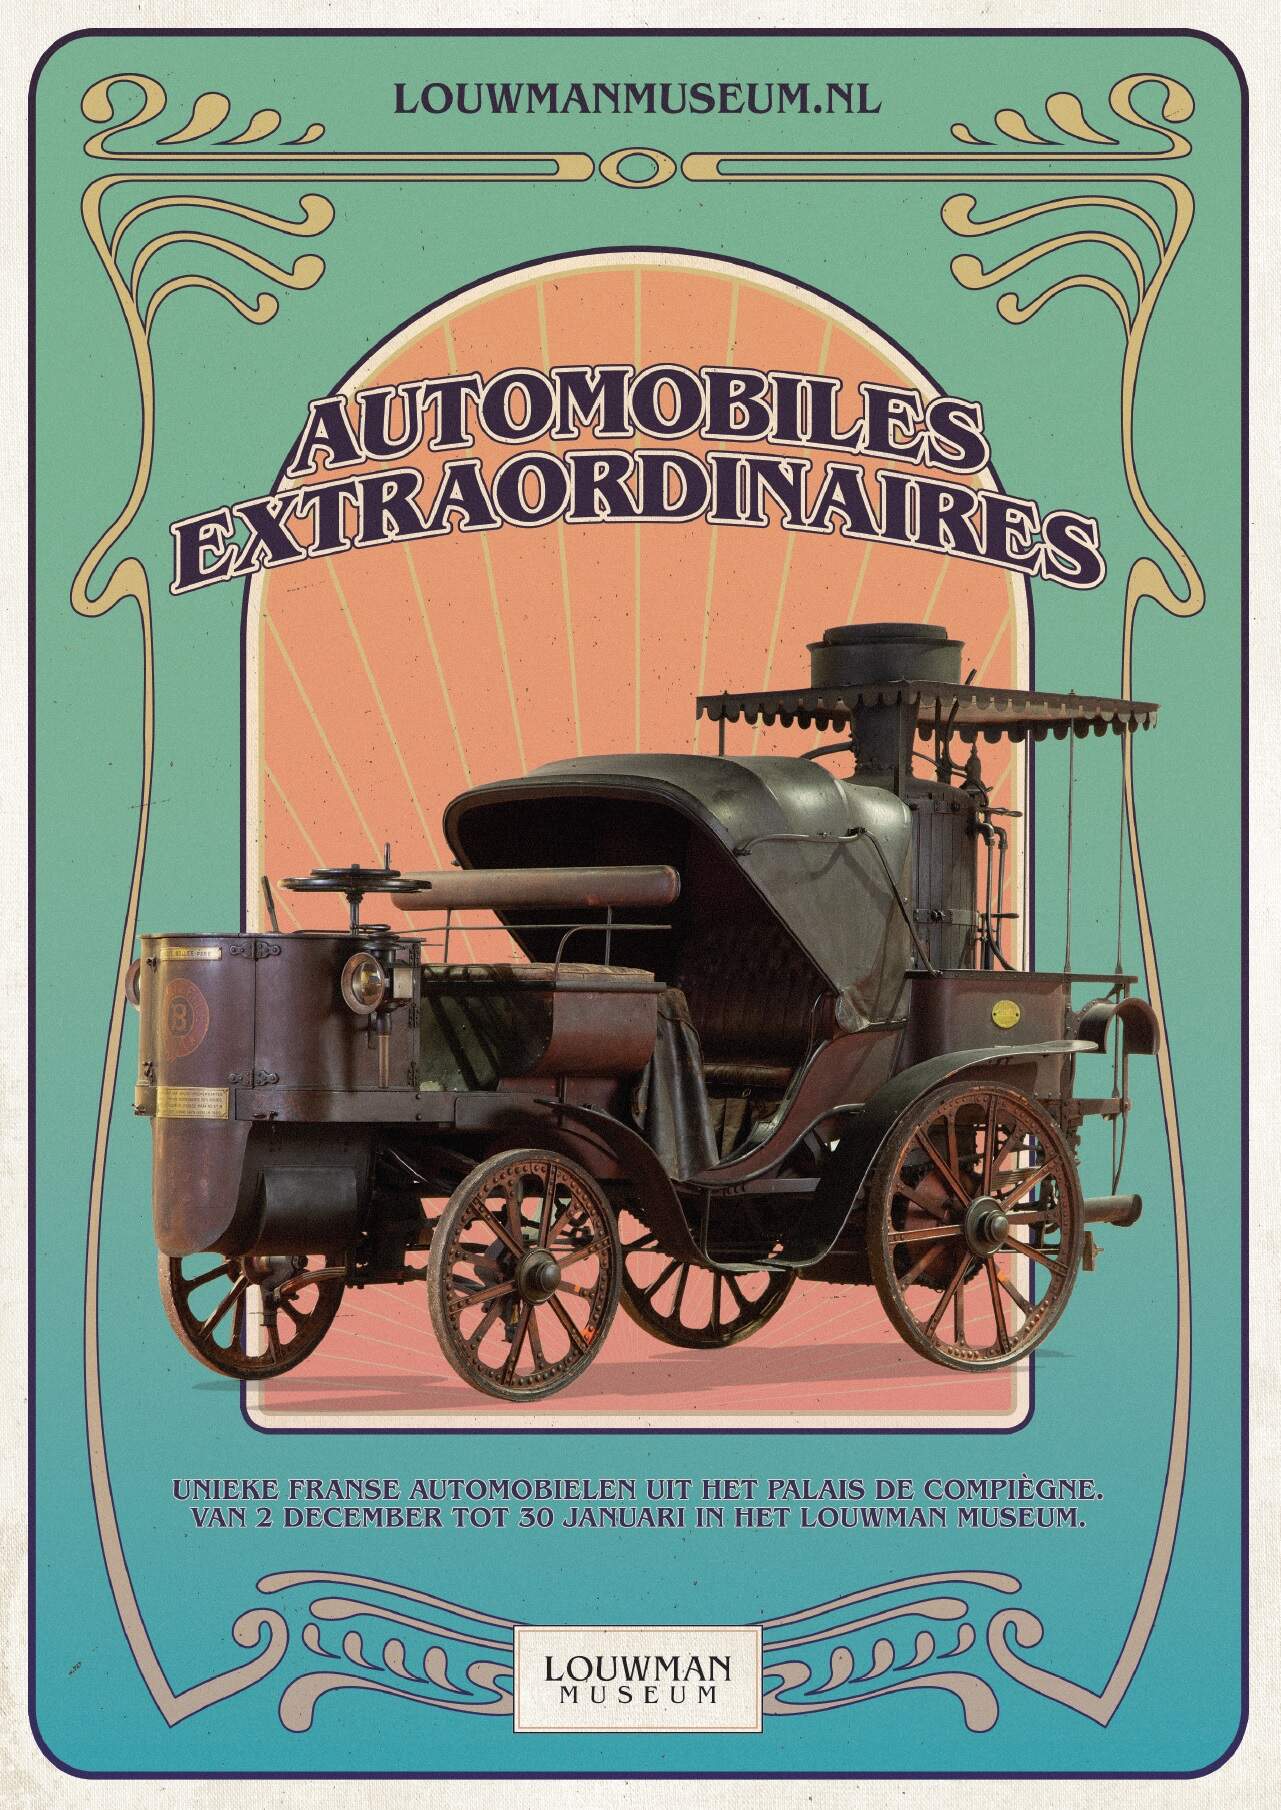 Louwman Museum - Automobiles Extraordinaires